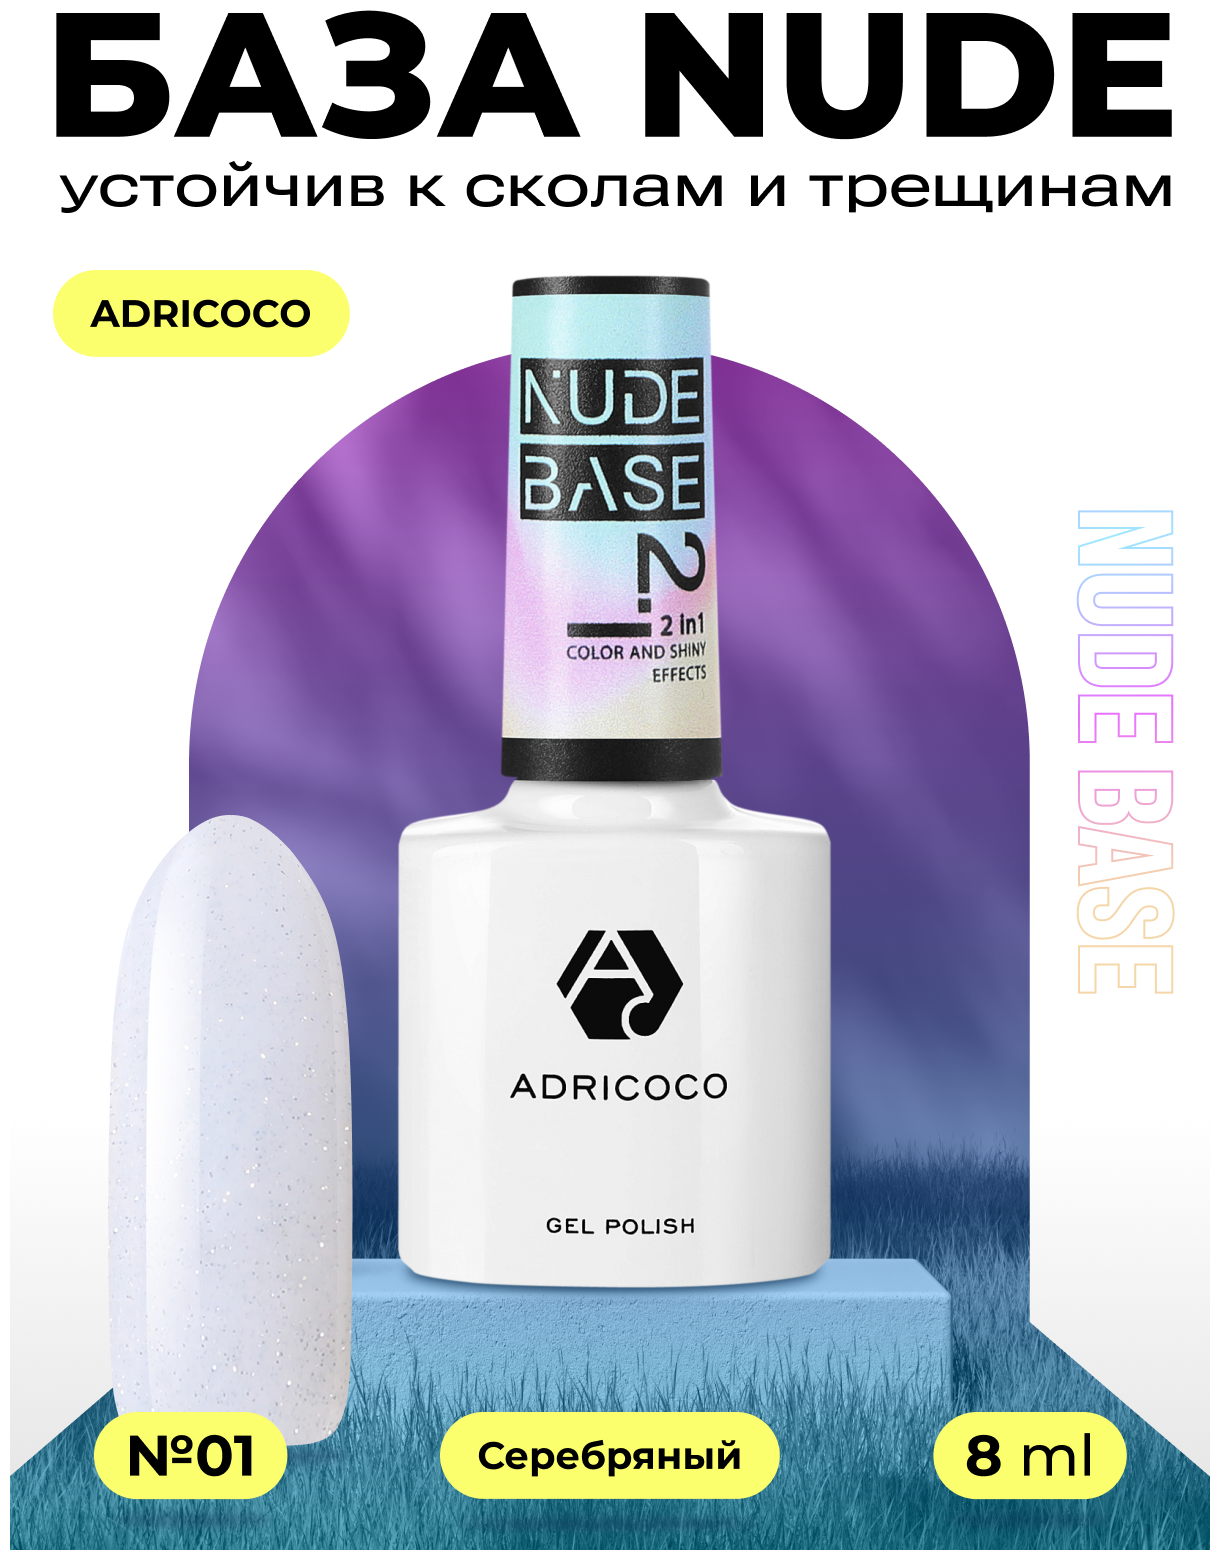 Adricoco, Nude Base 2 in 1 - светоотражающая цветная база №01 (nega), 8 мл